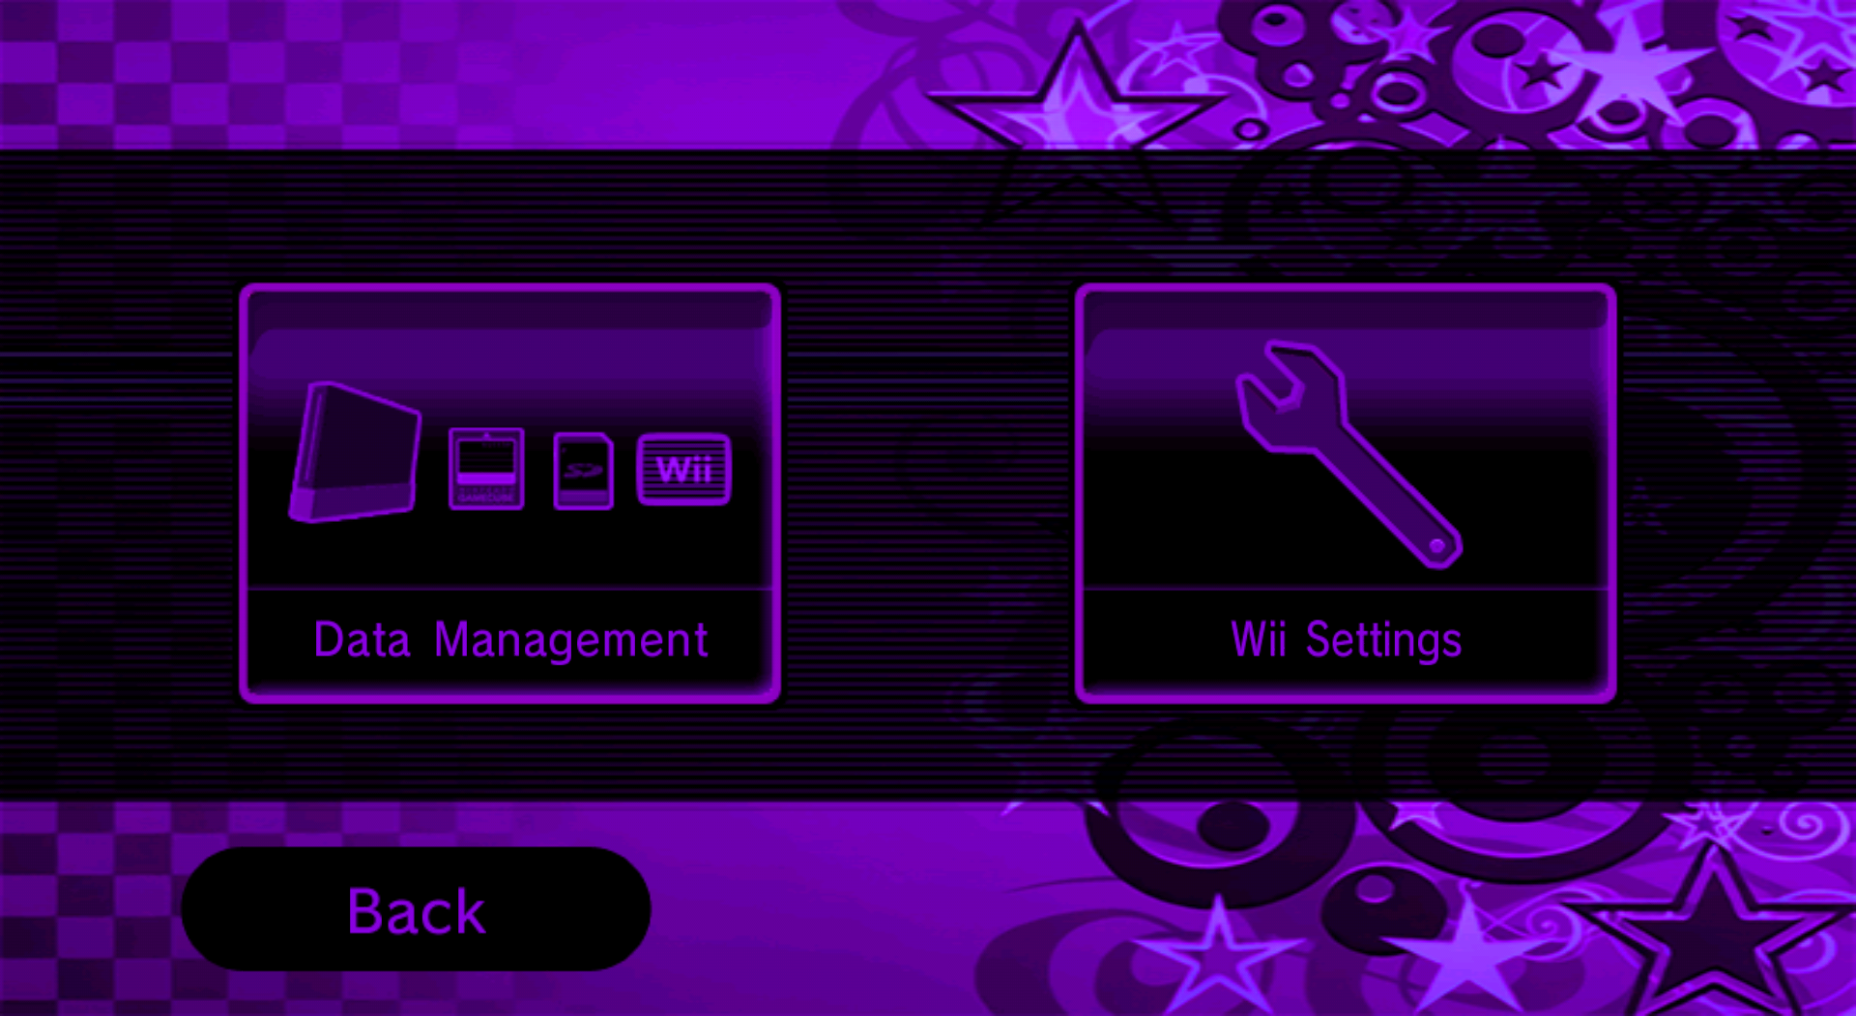 Wii Options menu - Purple